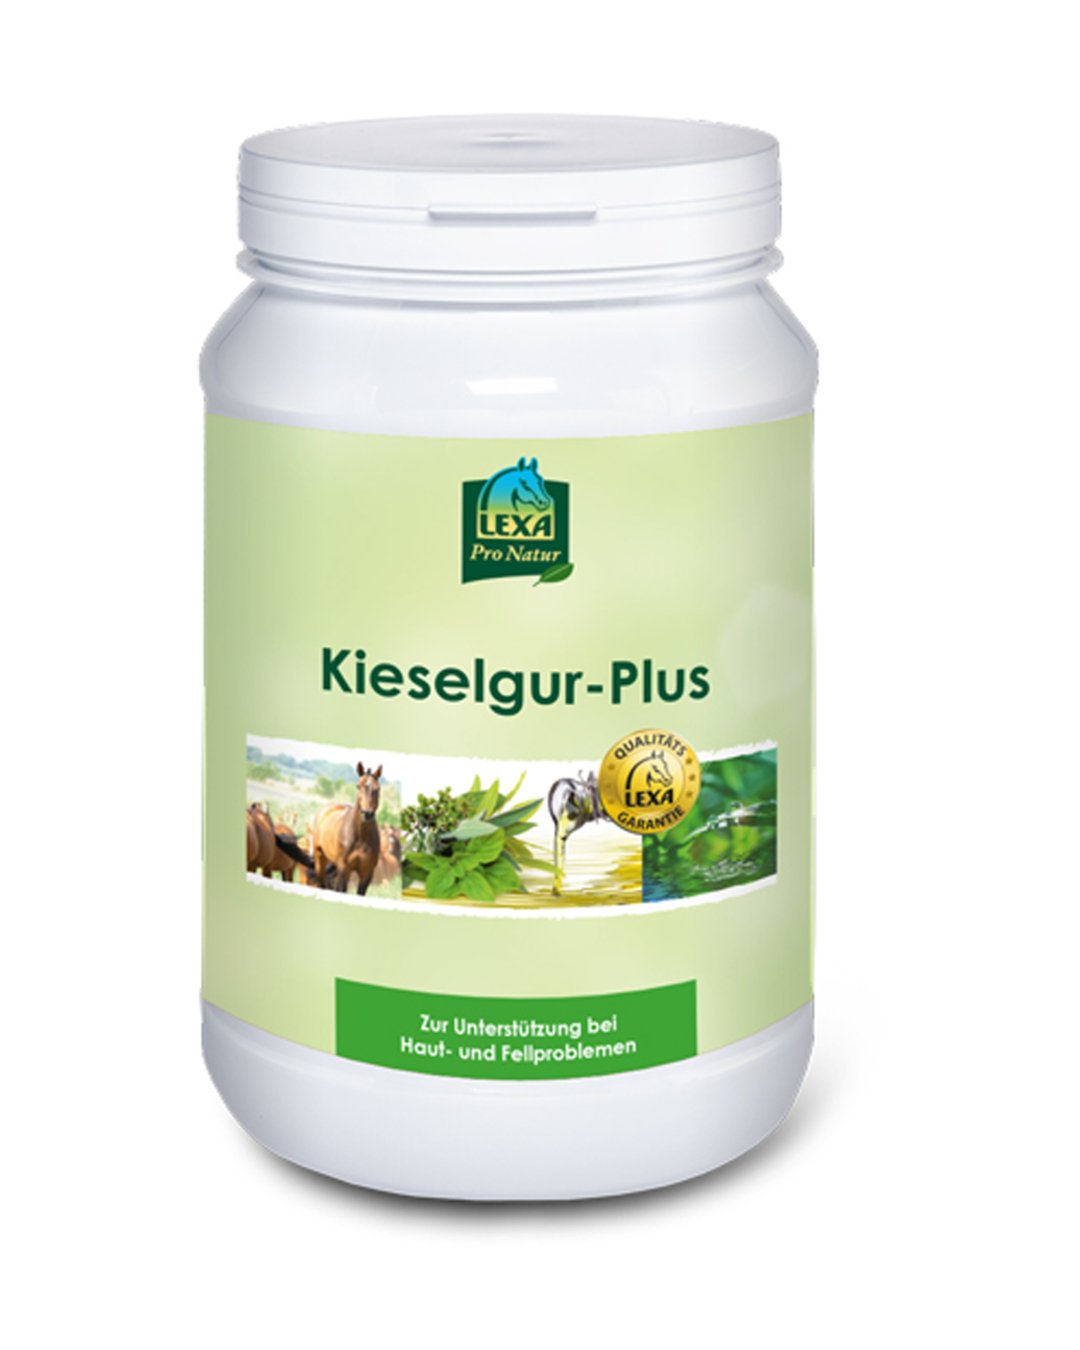 Ergänzungsfutter Kieselgur Plus Dose 1,5KG